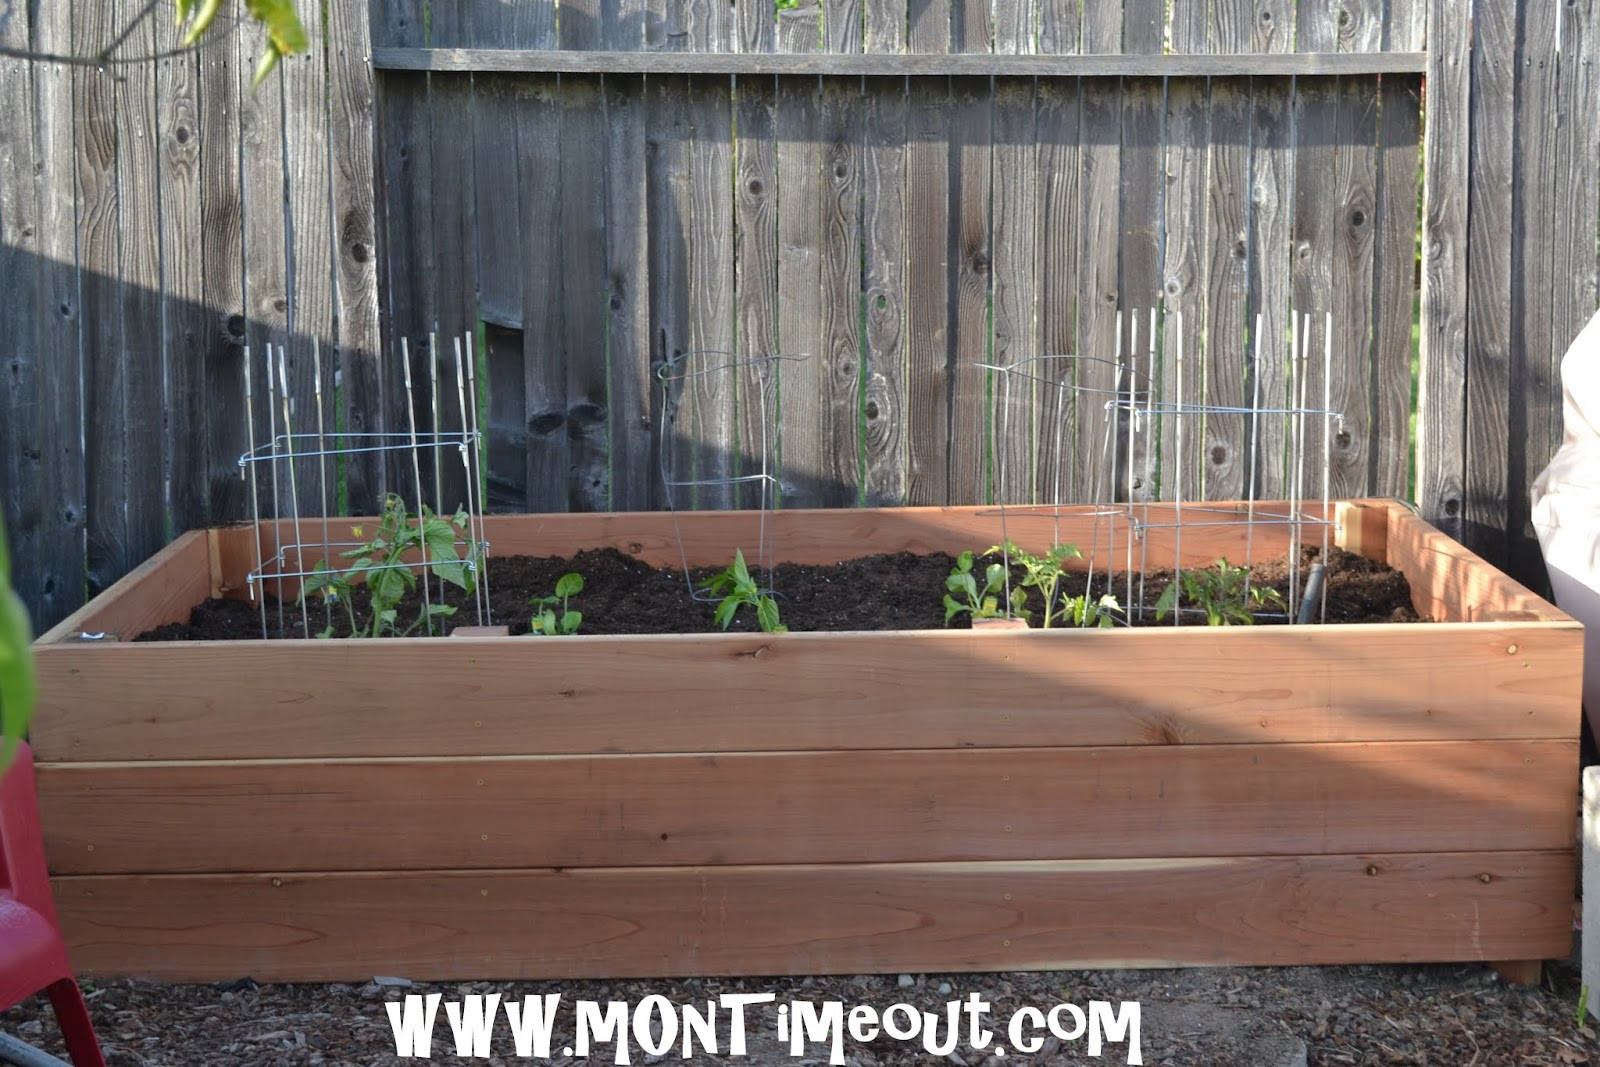 Best ideas about Garden Planter Box
. Save or Pin DIY Garden Planter Box Tutorial Now.